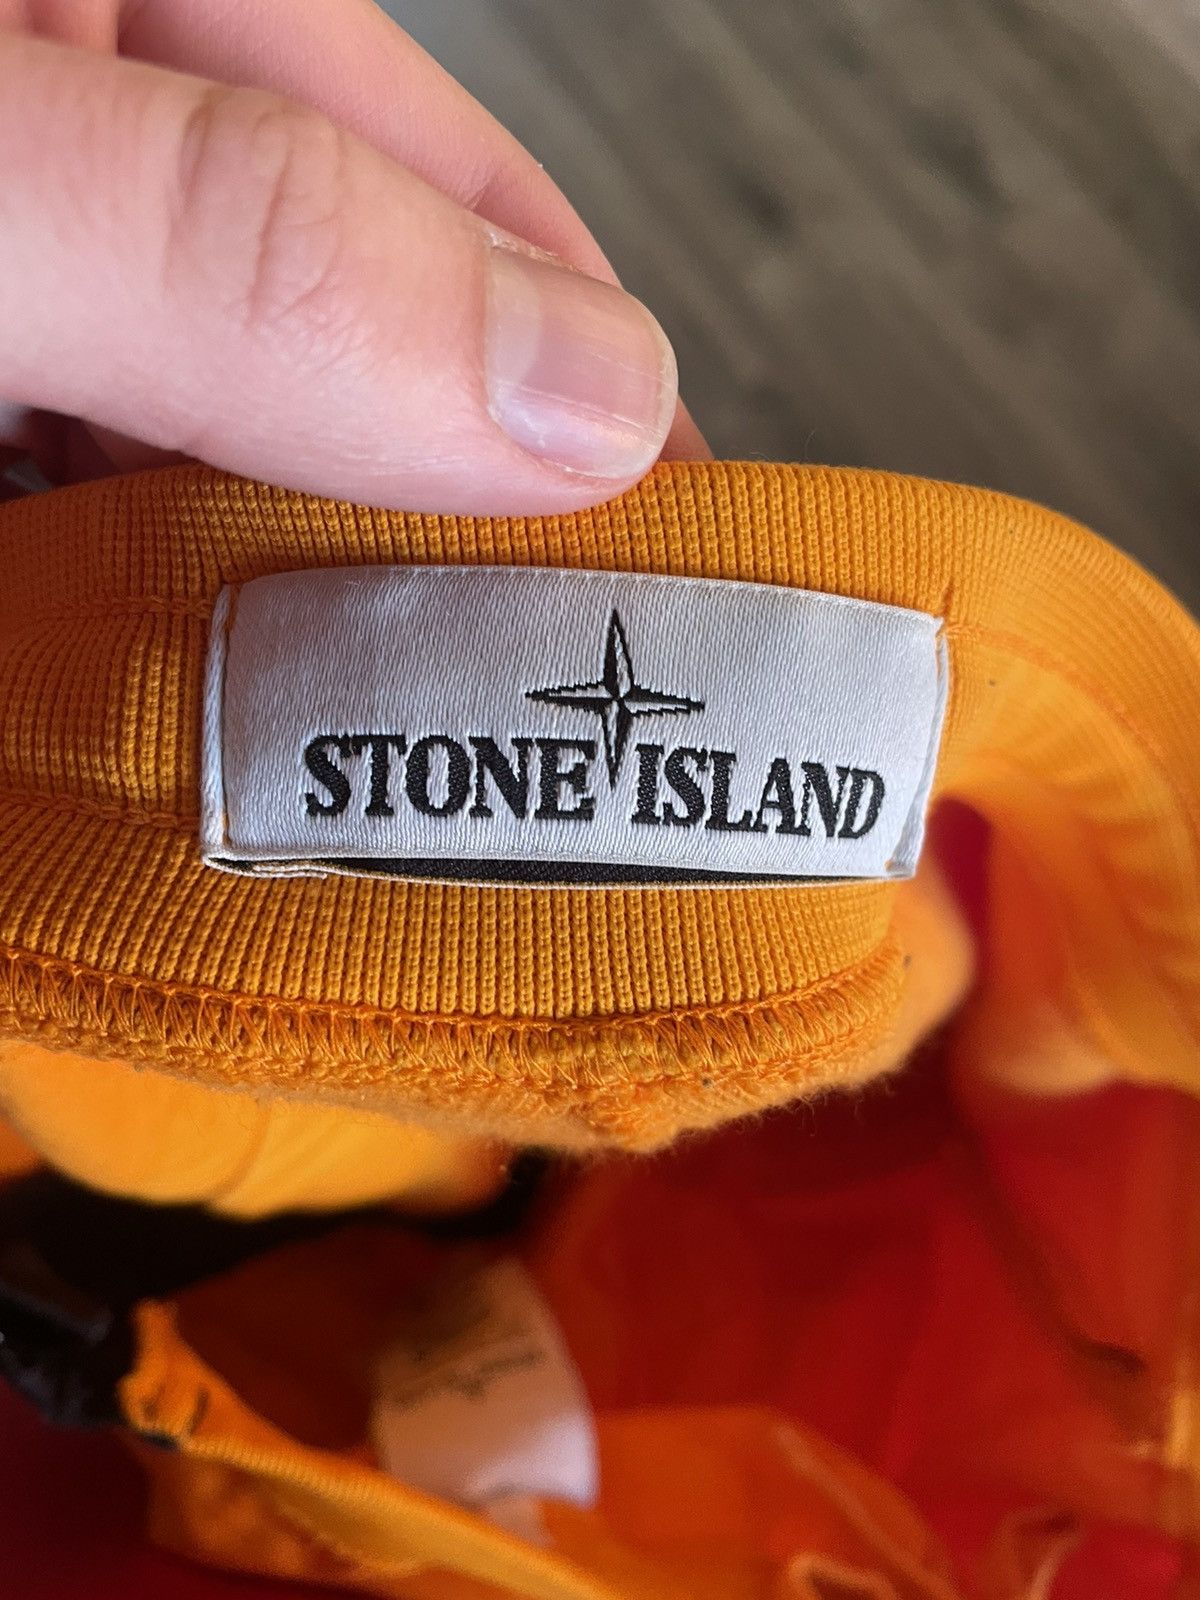 Stone Island Orange Cargo Sweat Pants Size US 34 / EU 50 - 5 Thumbnail